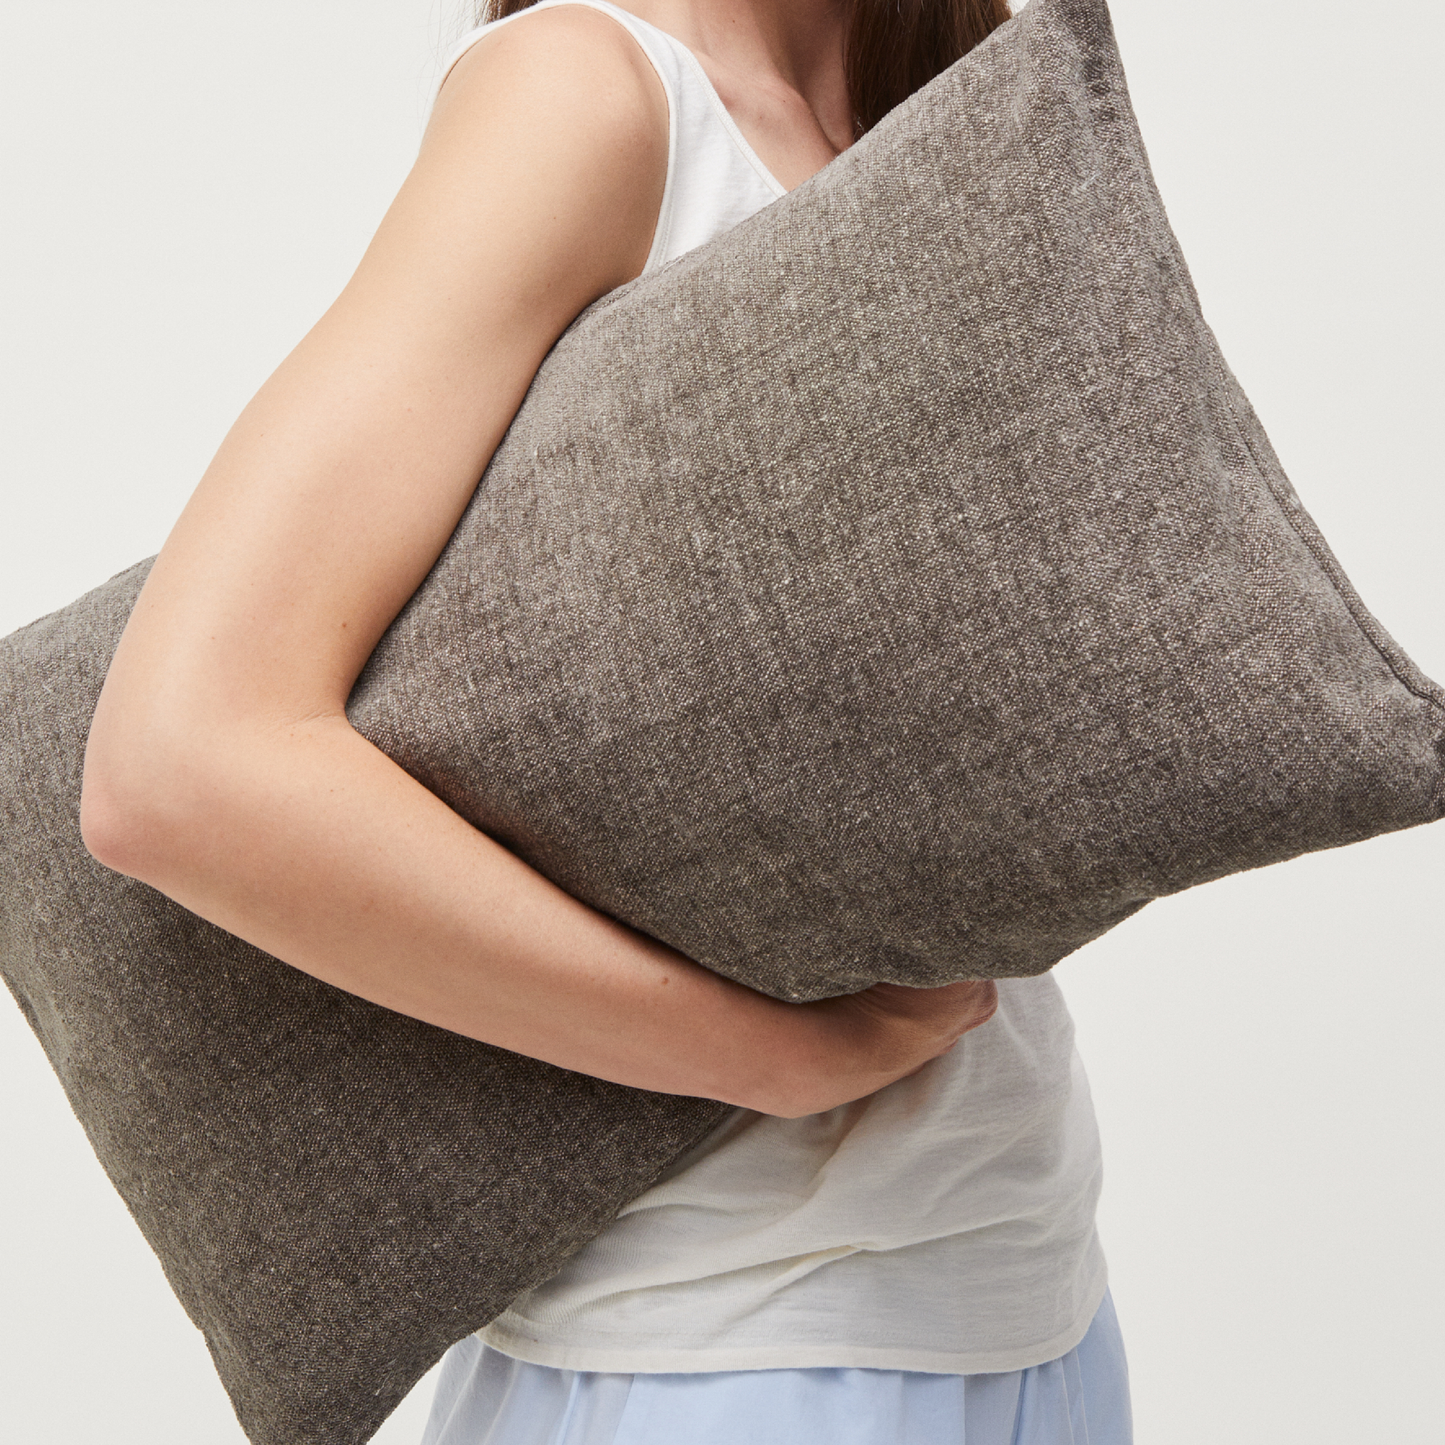 Pillow Cotton Linen, Earth (40x60)